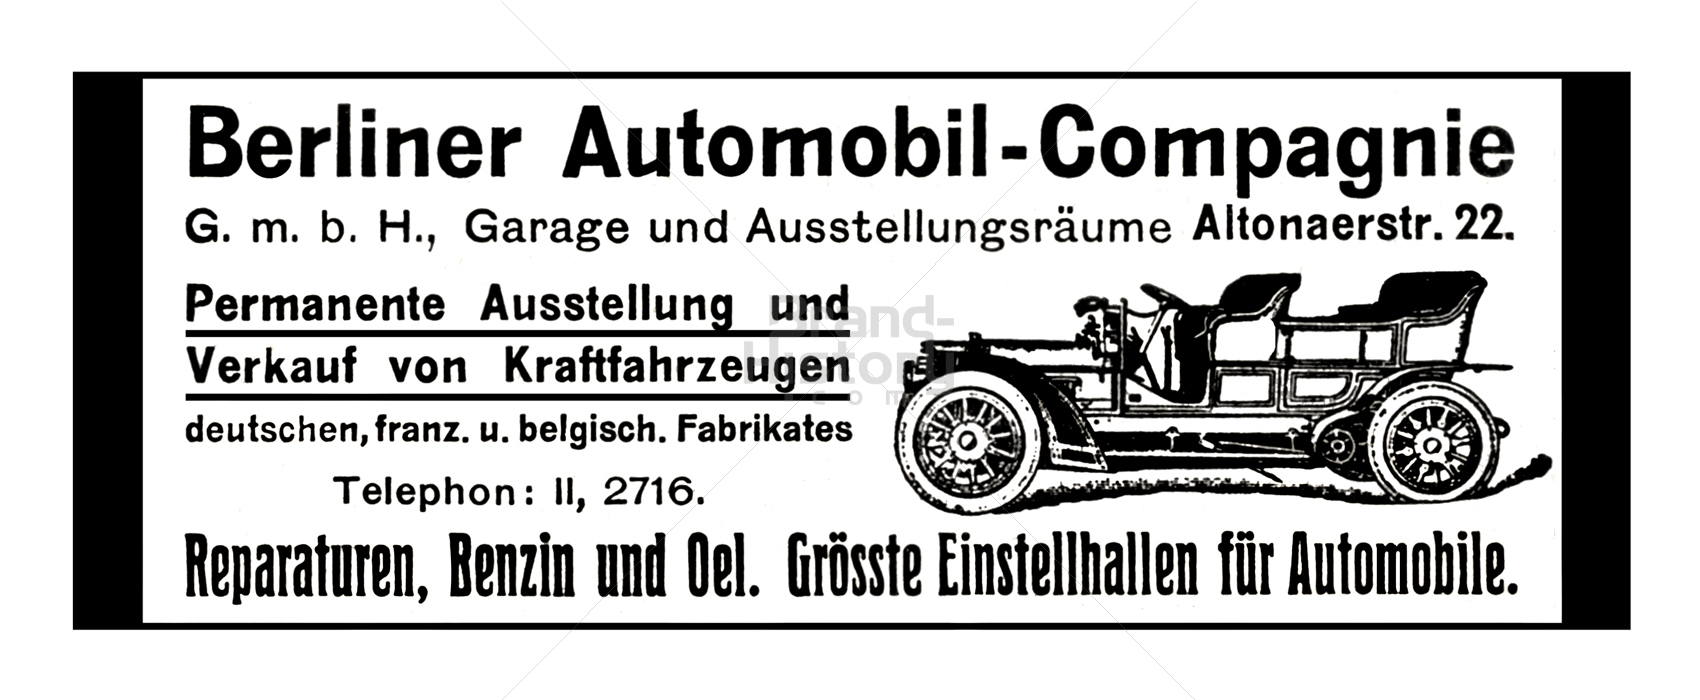 Berliner Automobil-Compagnie